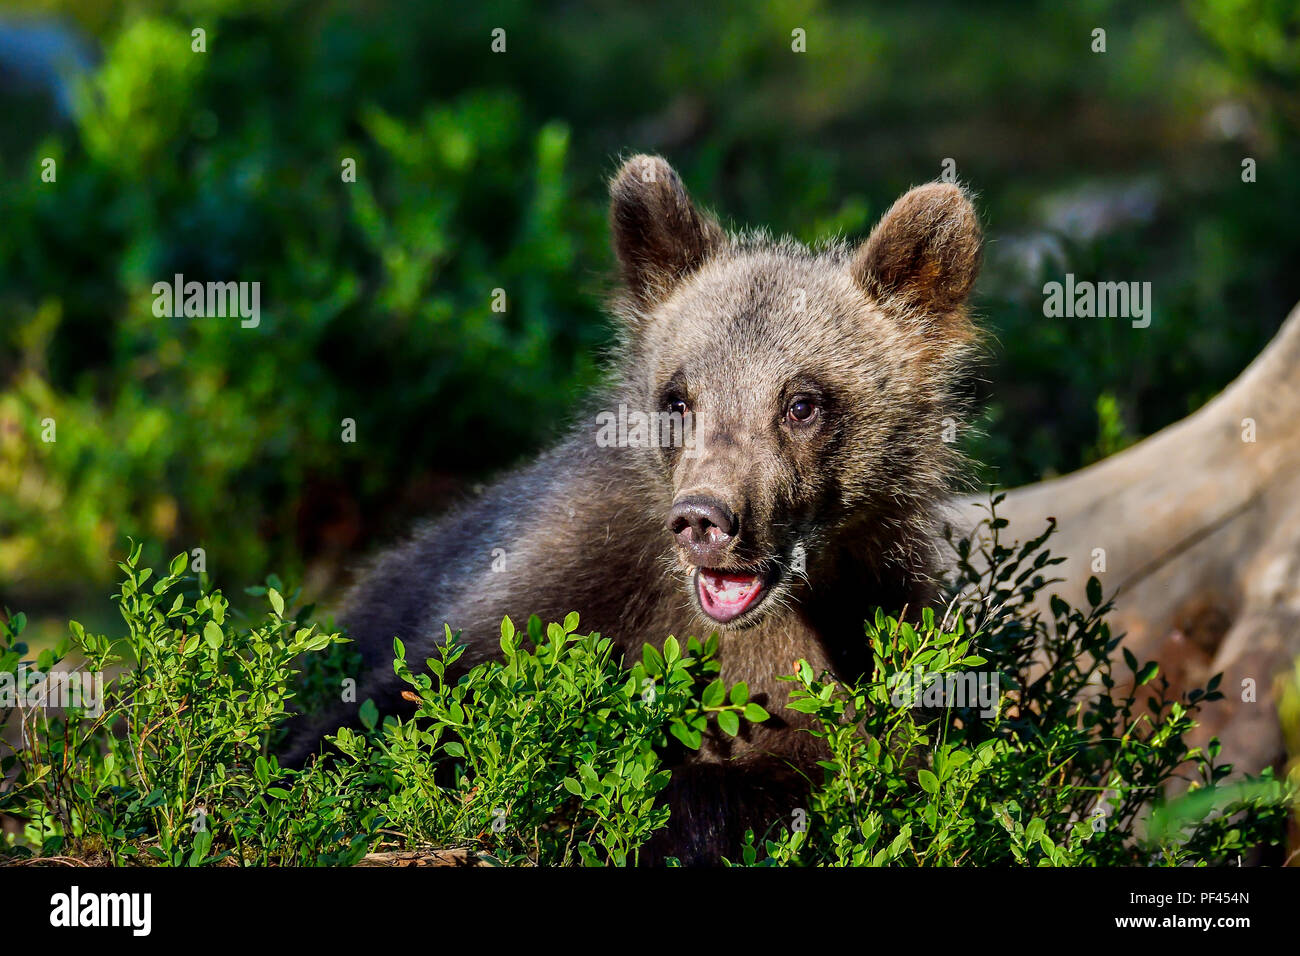 Brown bear cub is looking surprised. Stock Photo